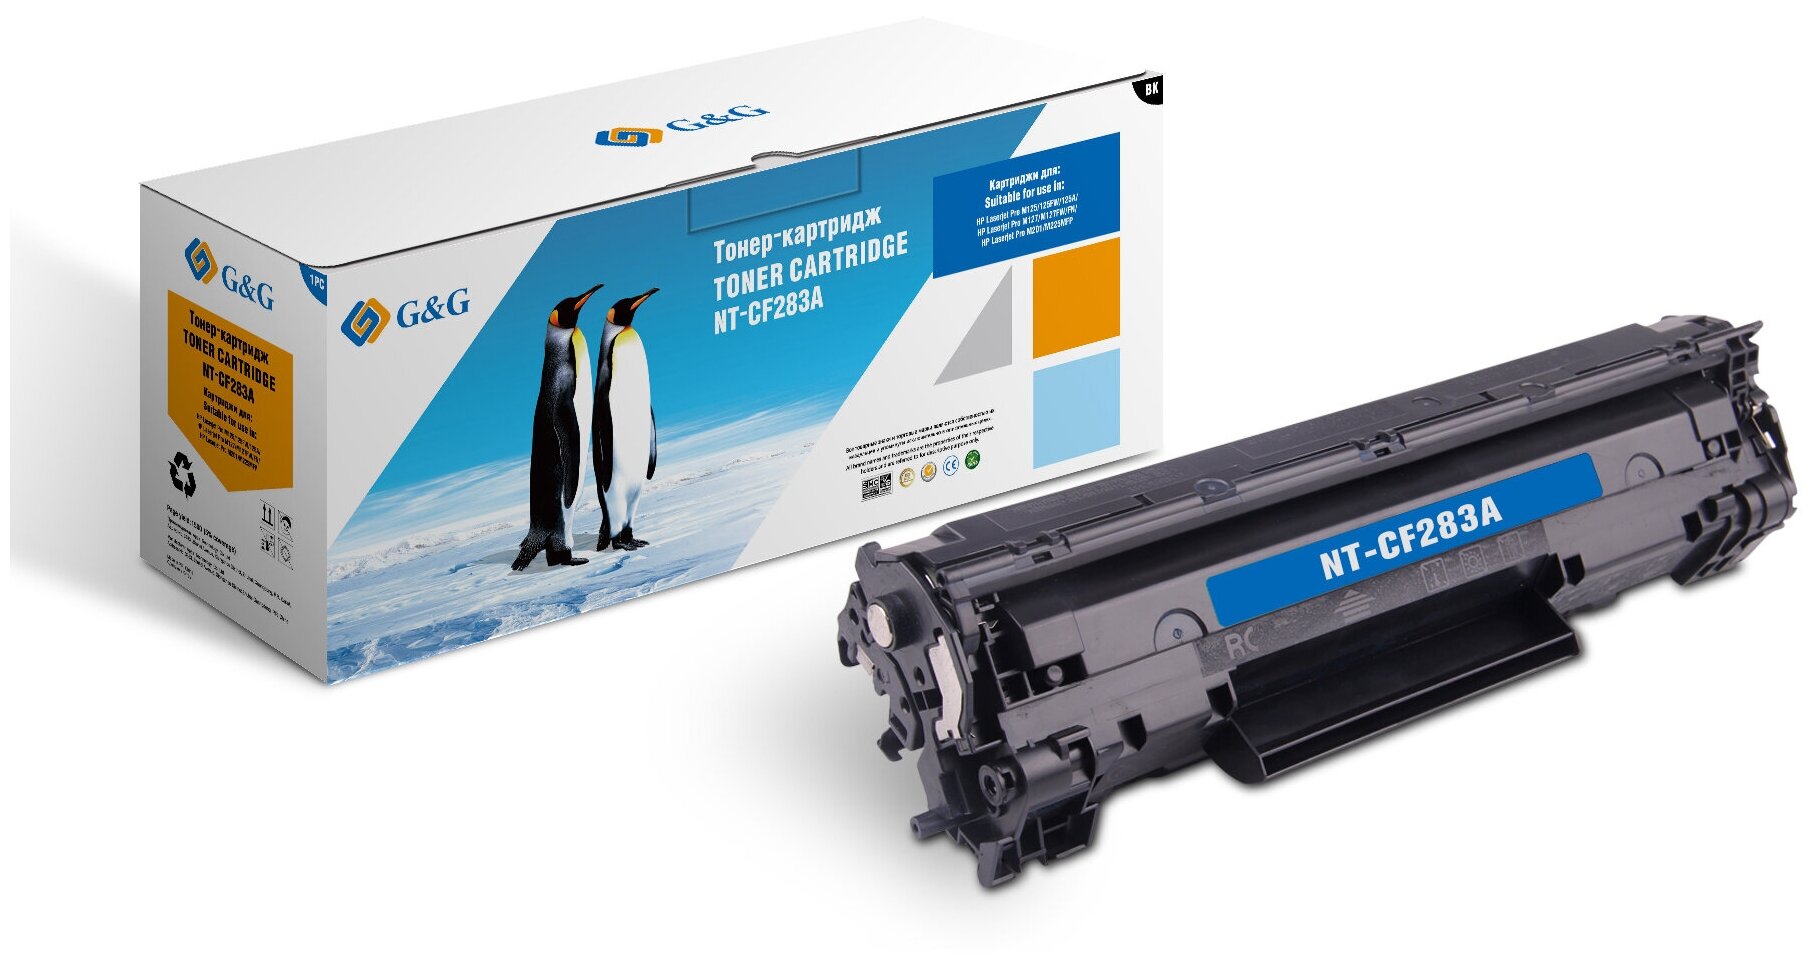 Картридж лазерный G&G Nt-cf283a черный (1500стр.) для HP LJ Pro M125/125fw/125a/m127/m127fw/fn/m201/